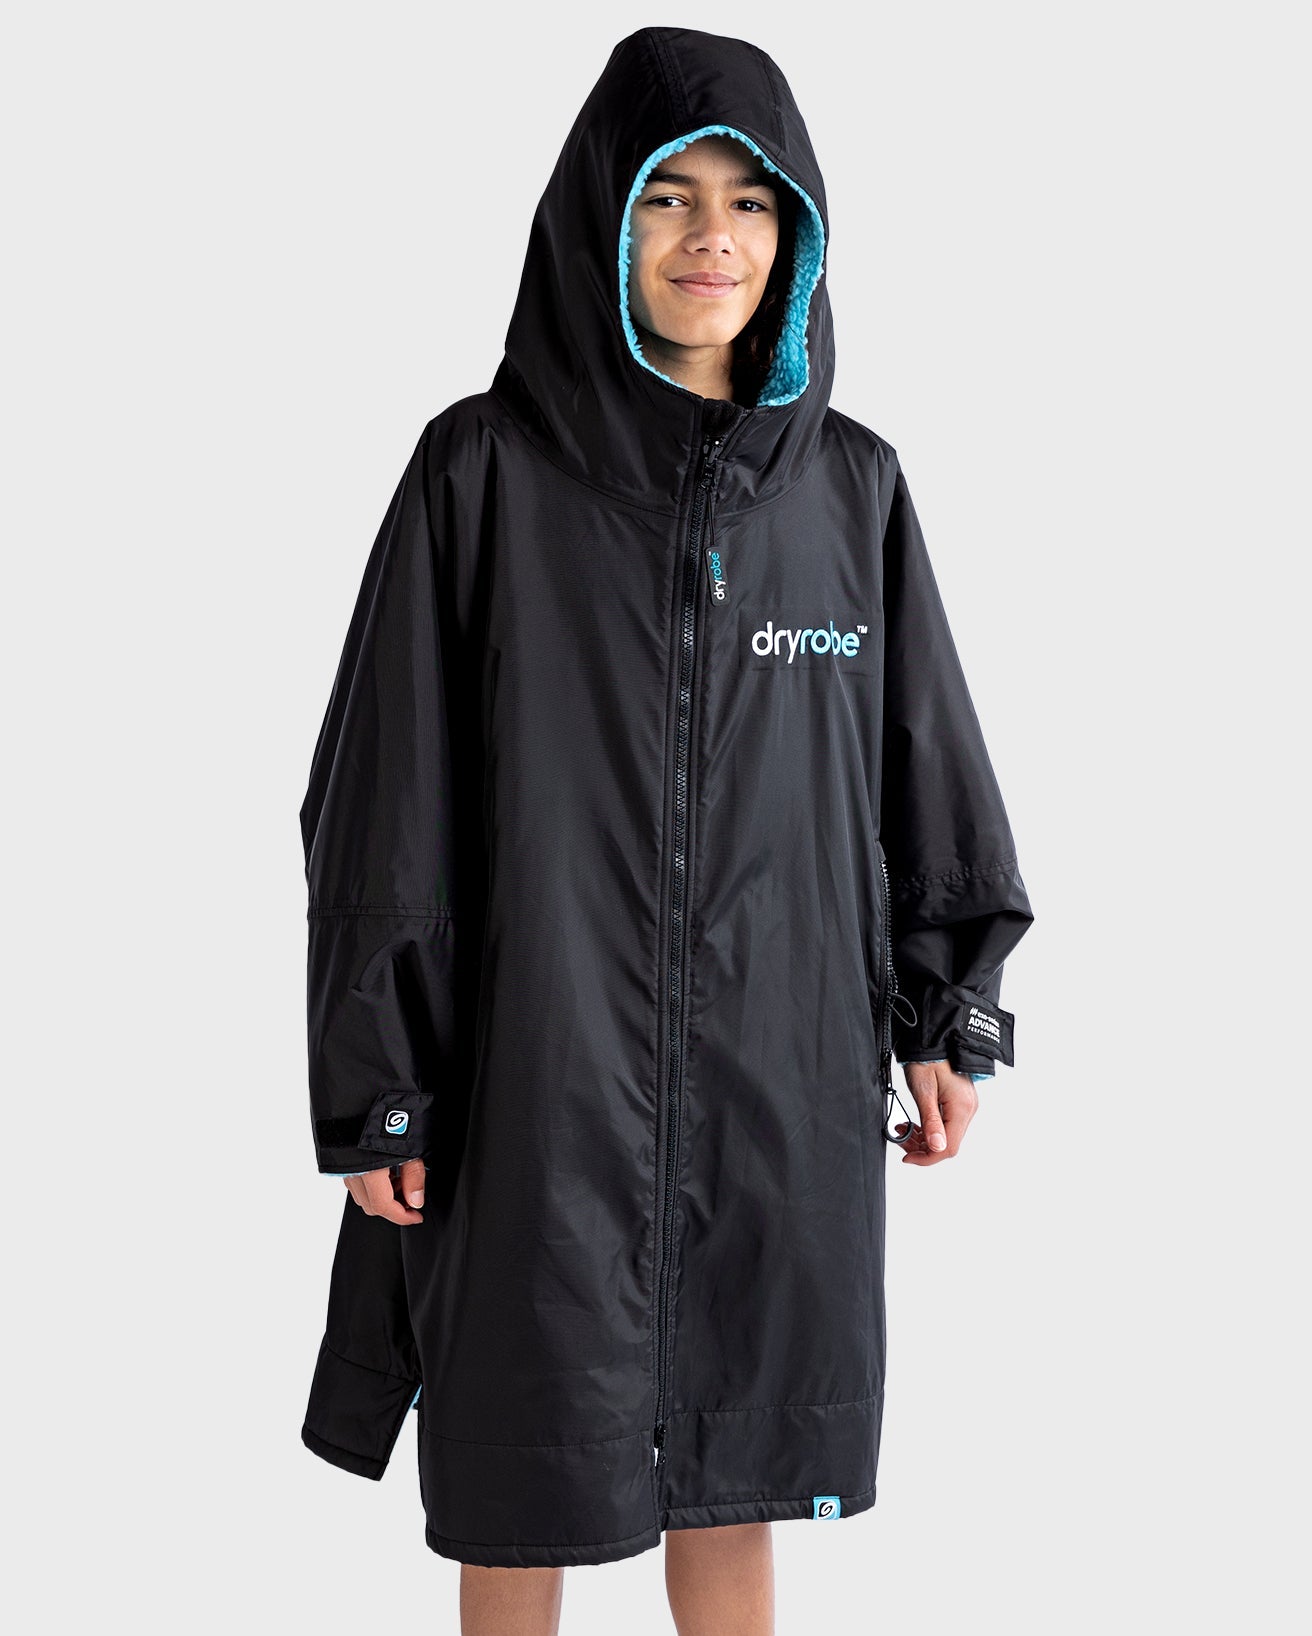 1|Boy wearing Black Blue dryrobe® Advance Kids Long Sleeve with hood up 